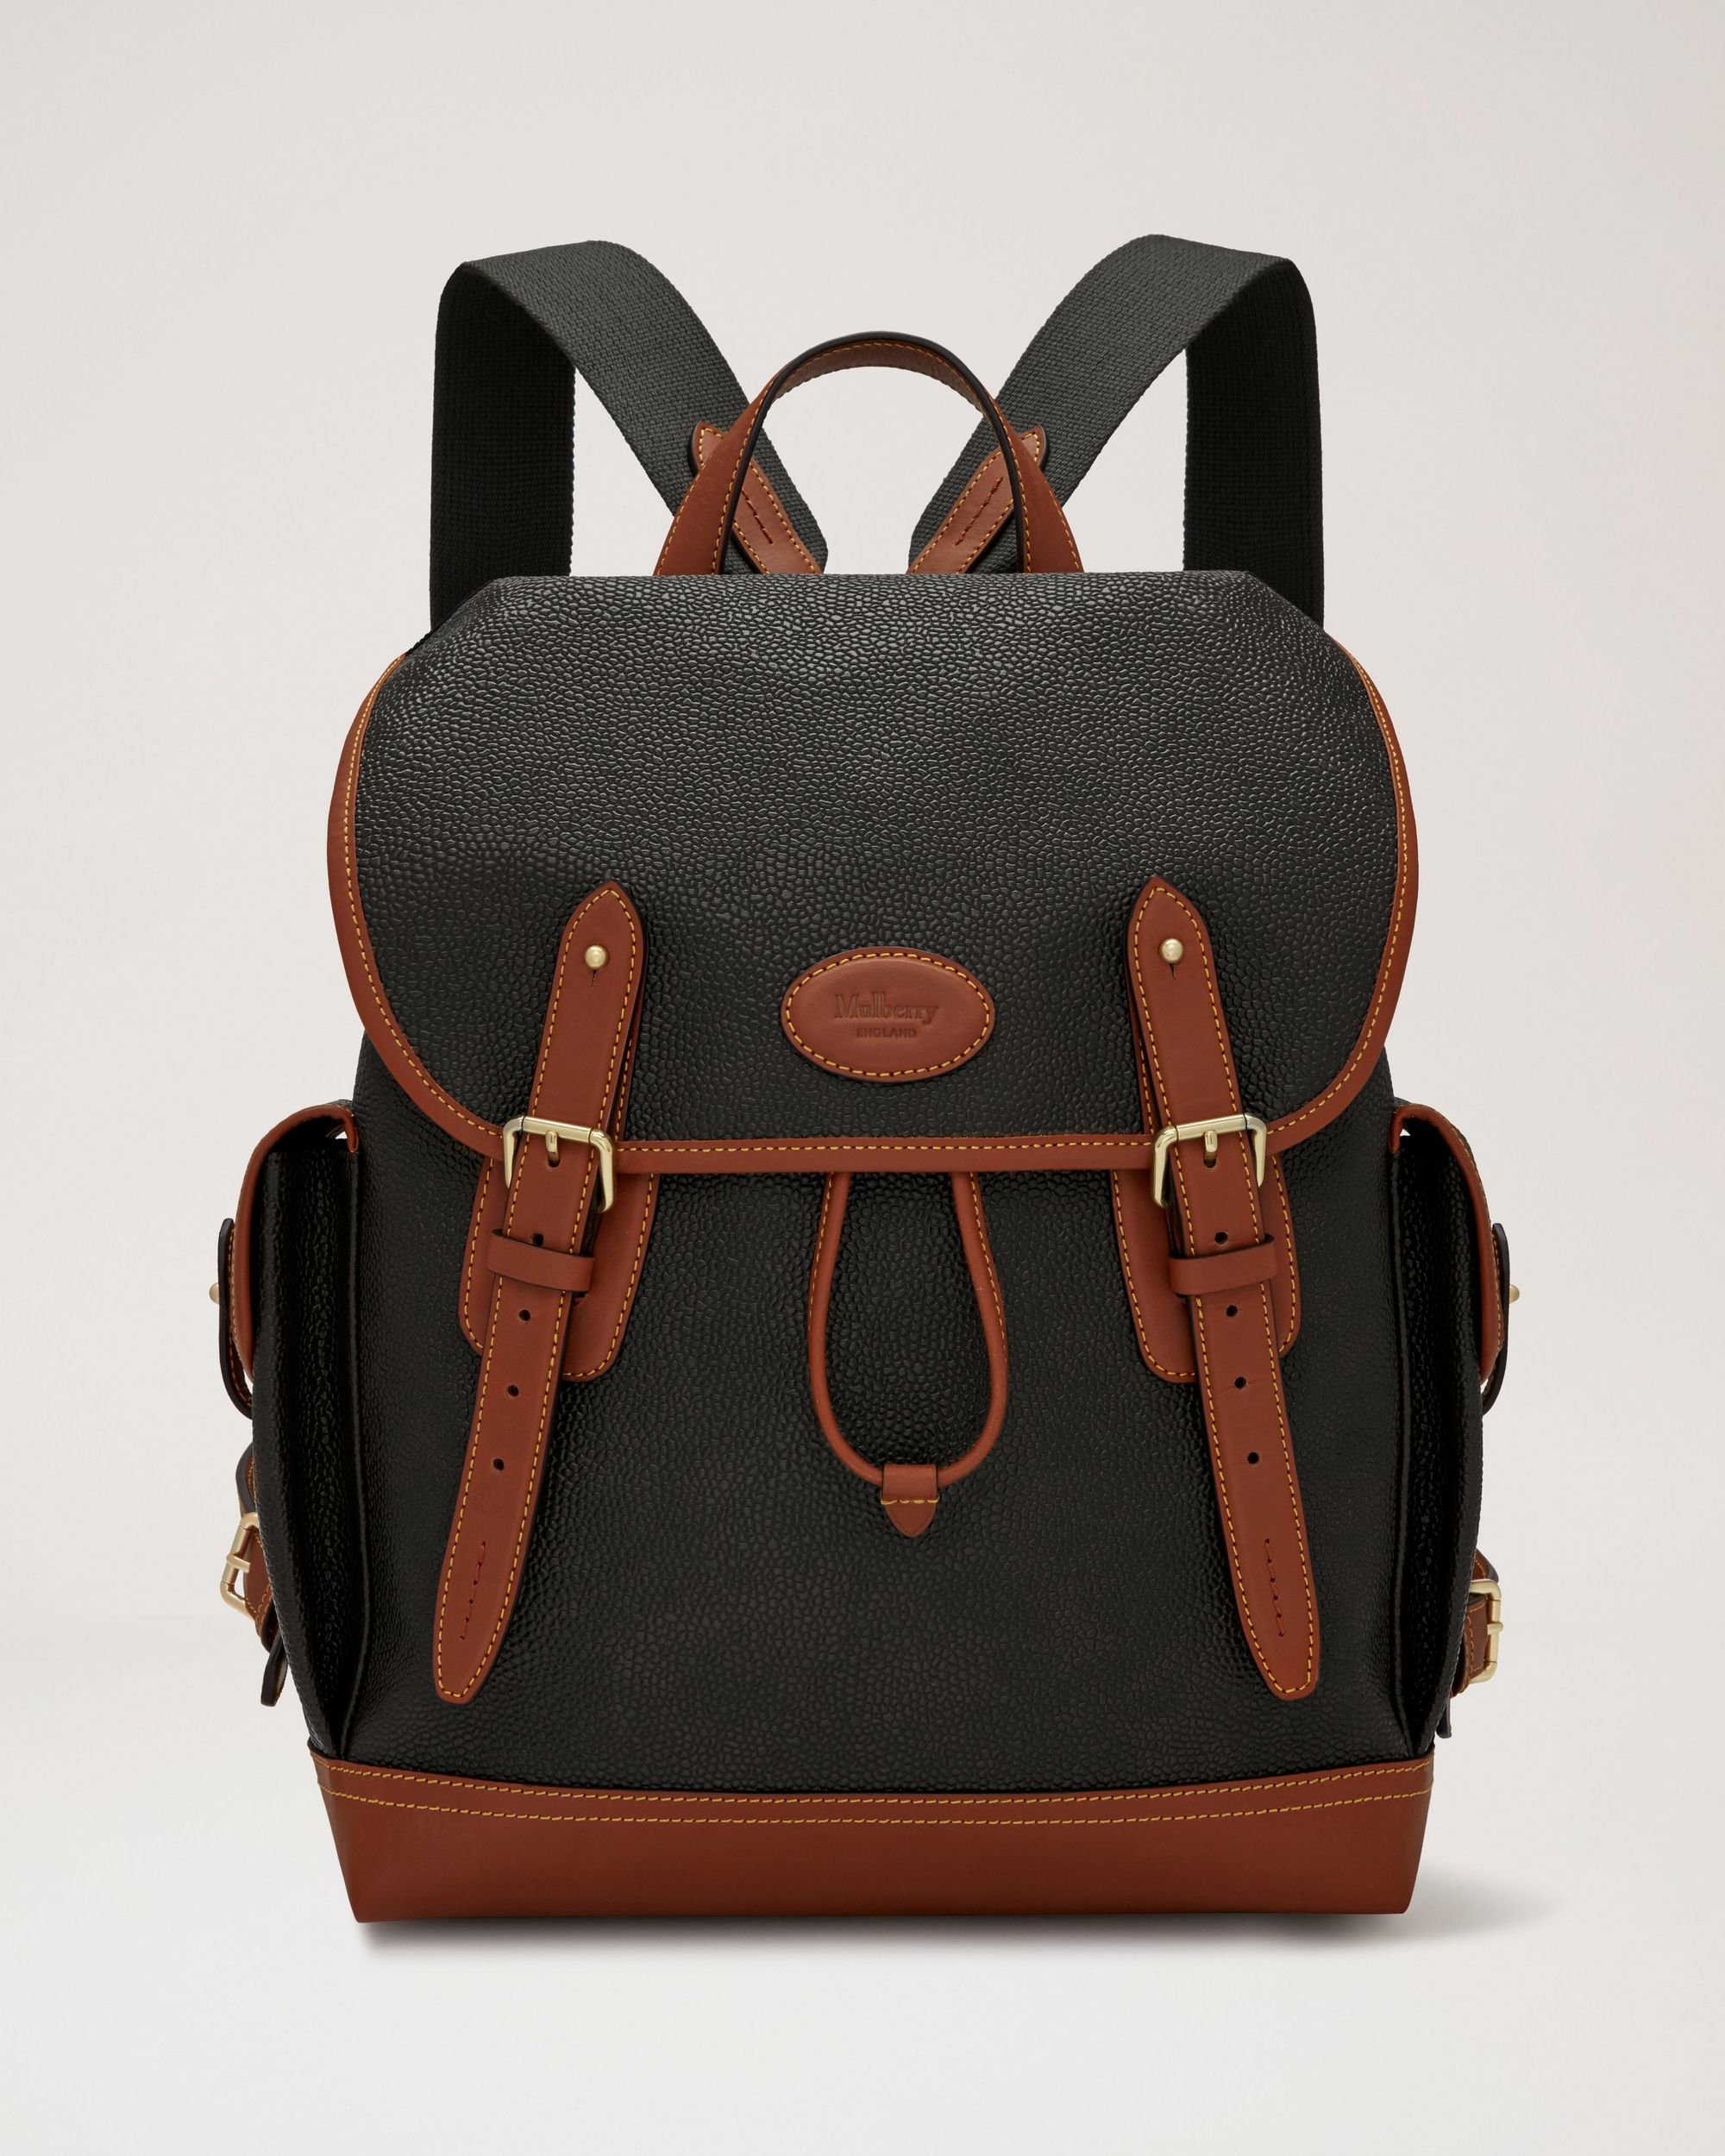 Black and brown aesthetic designer backpack